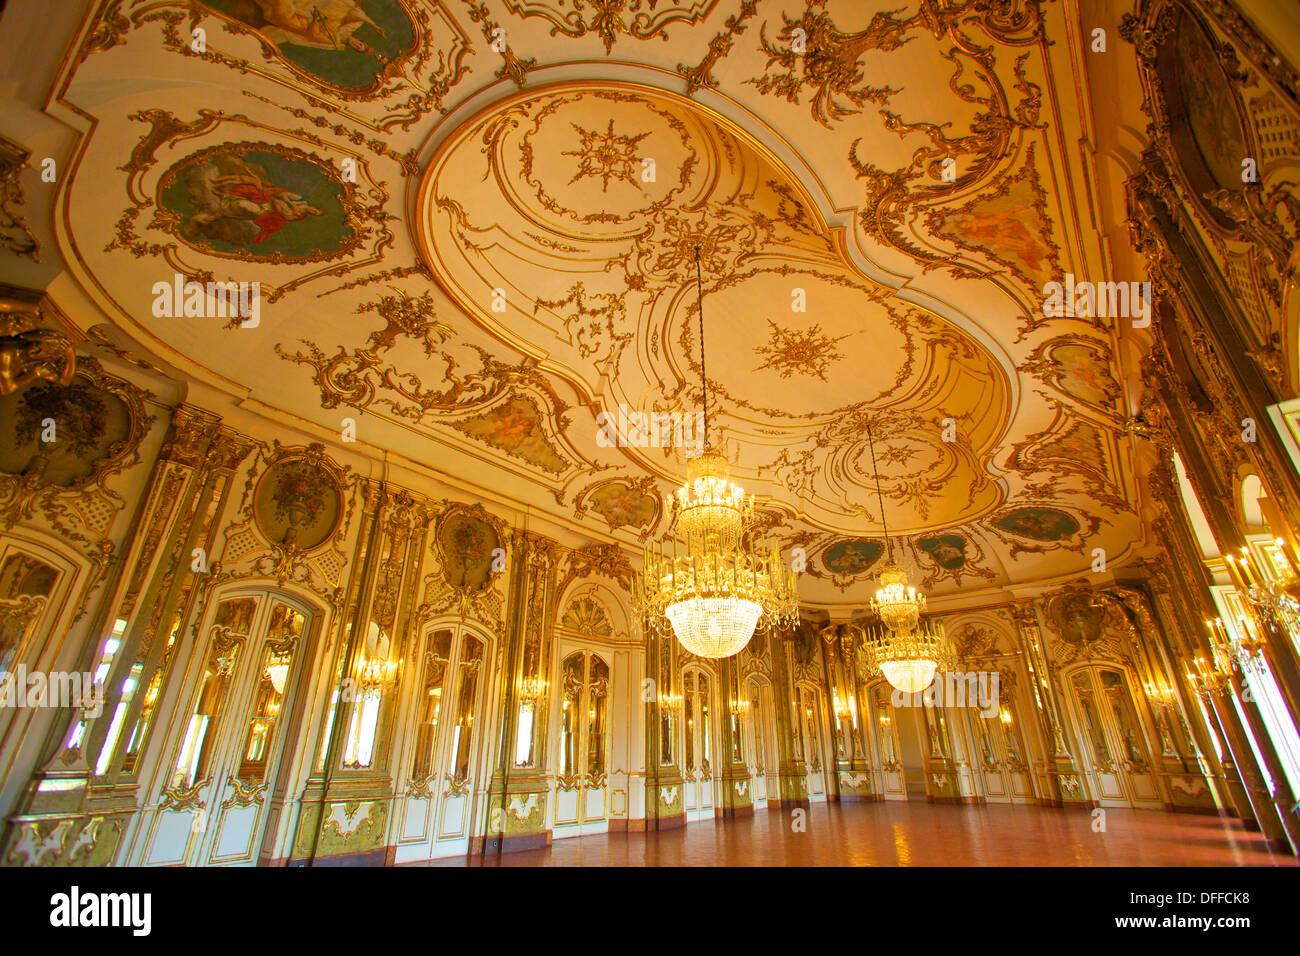 Ballroom, Palacio de Queluz, Lisbon, Portugal, Iberian Peninsula, South West Europe Stock Photo